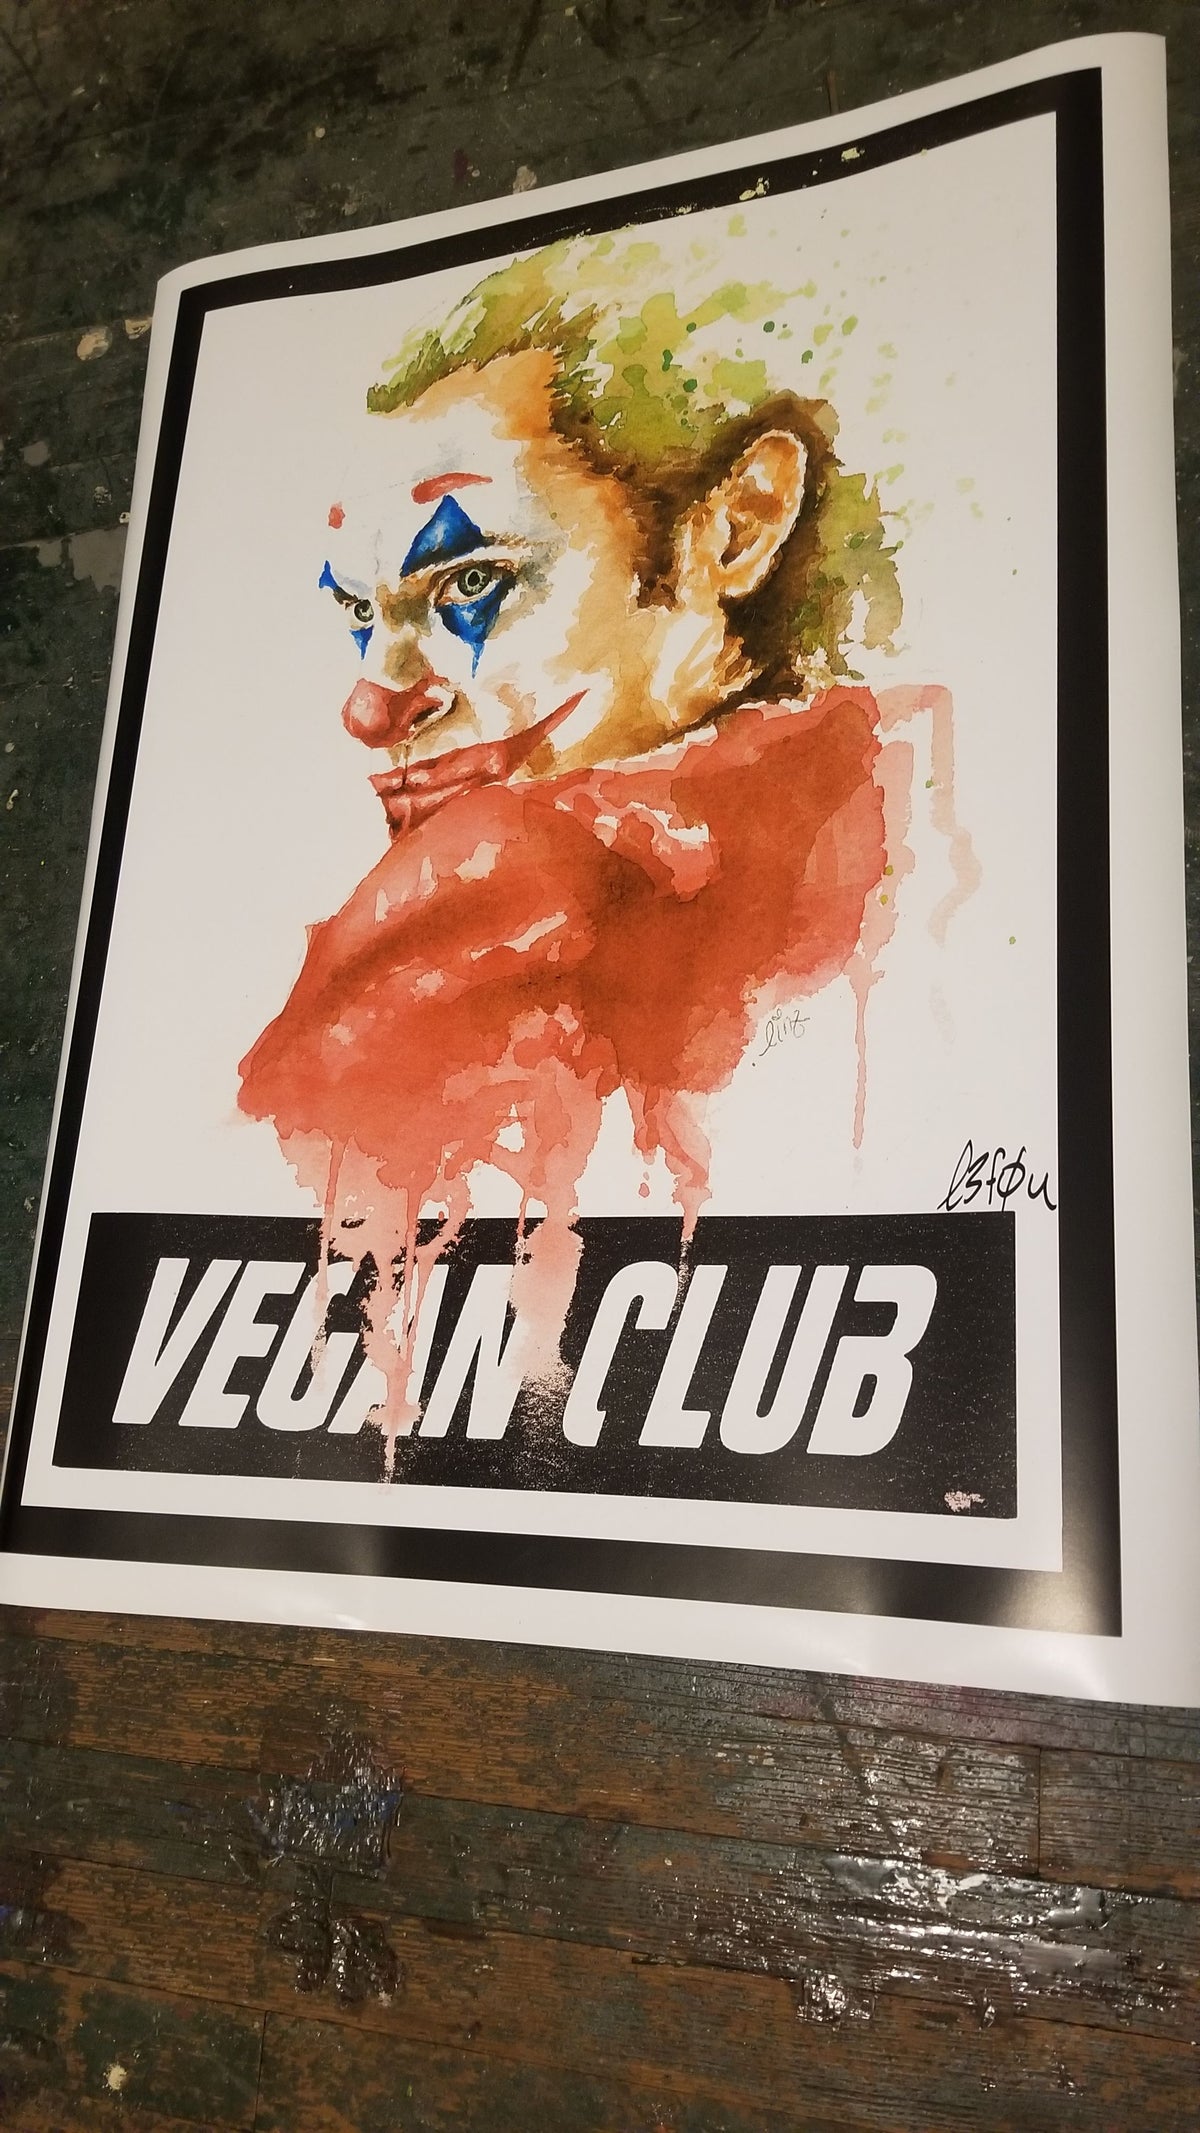 Ltd Edition Joker Poster or Newsprint collab with Lindsay Lewis